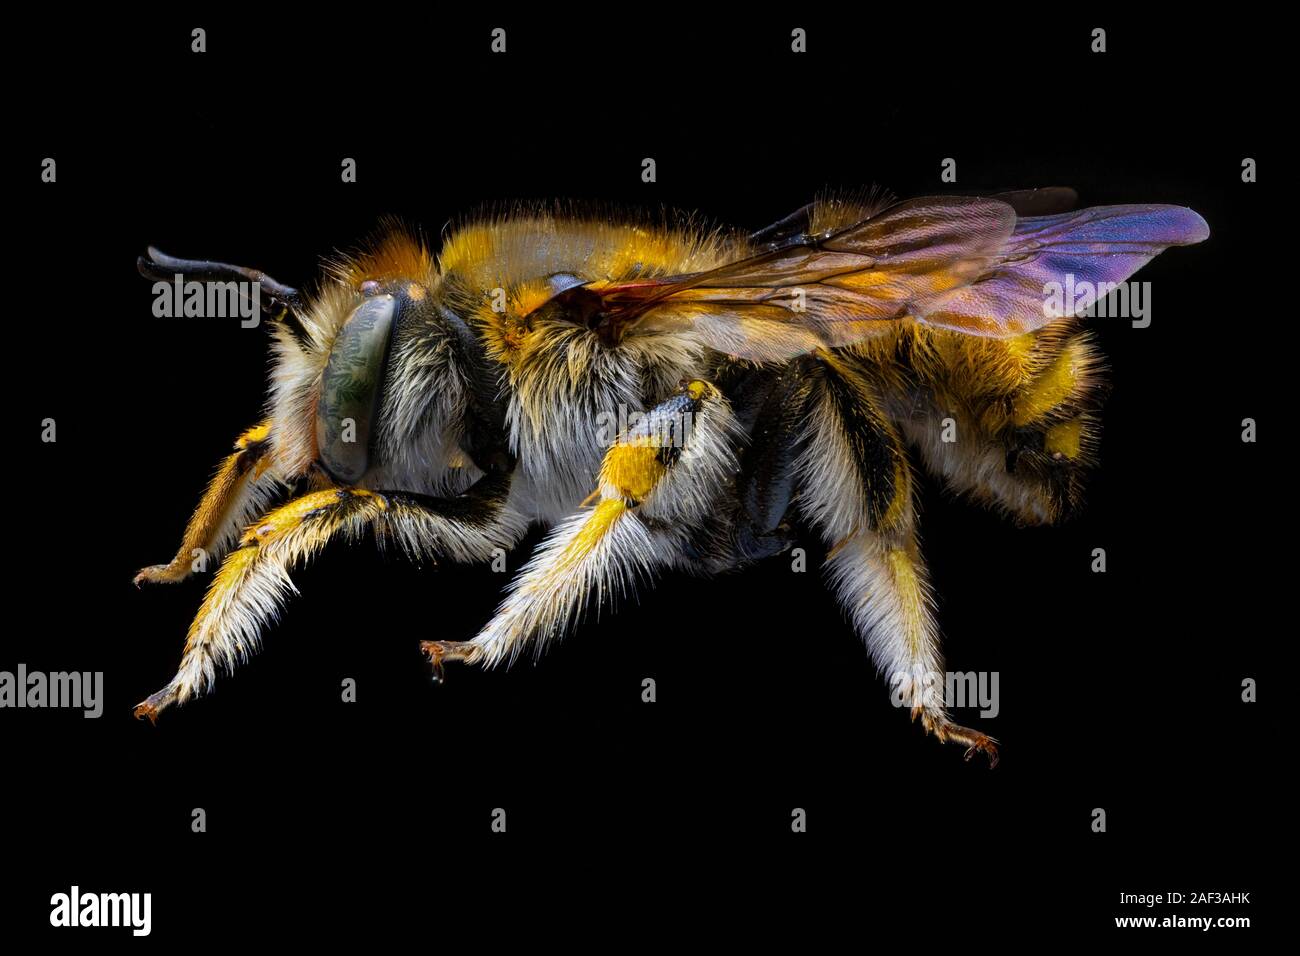 Bee insect Anthidium Manicatum. Macro portrait on black background, stack from many photos. Stock Photo